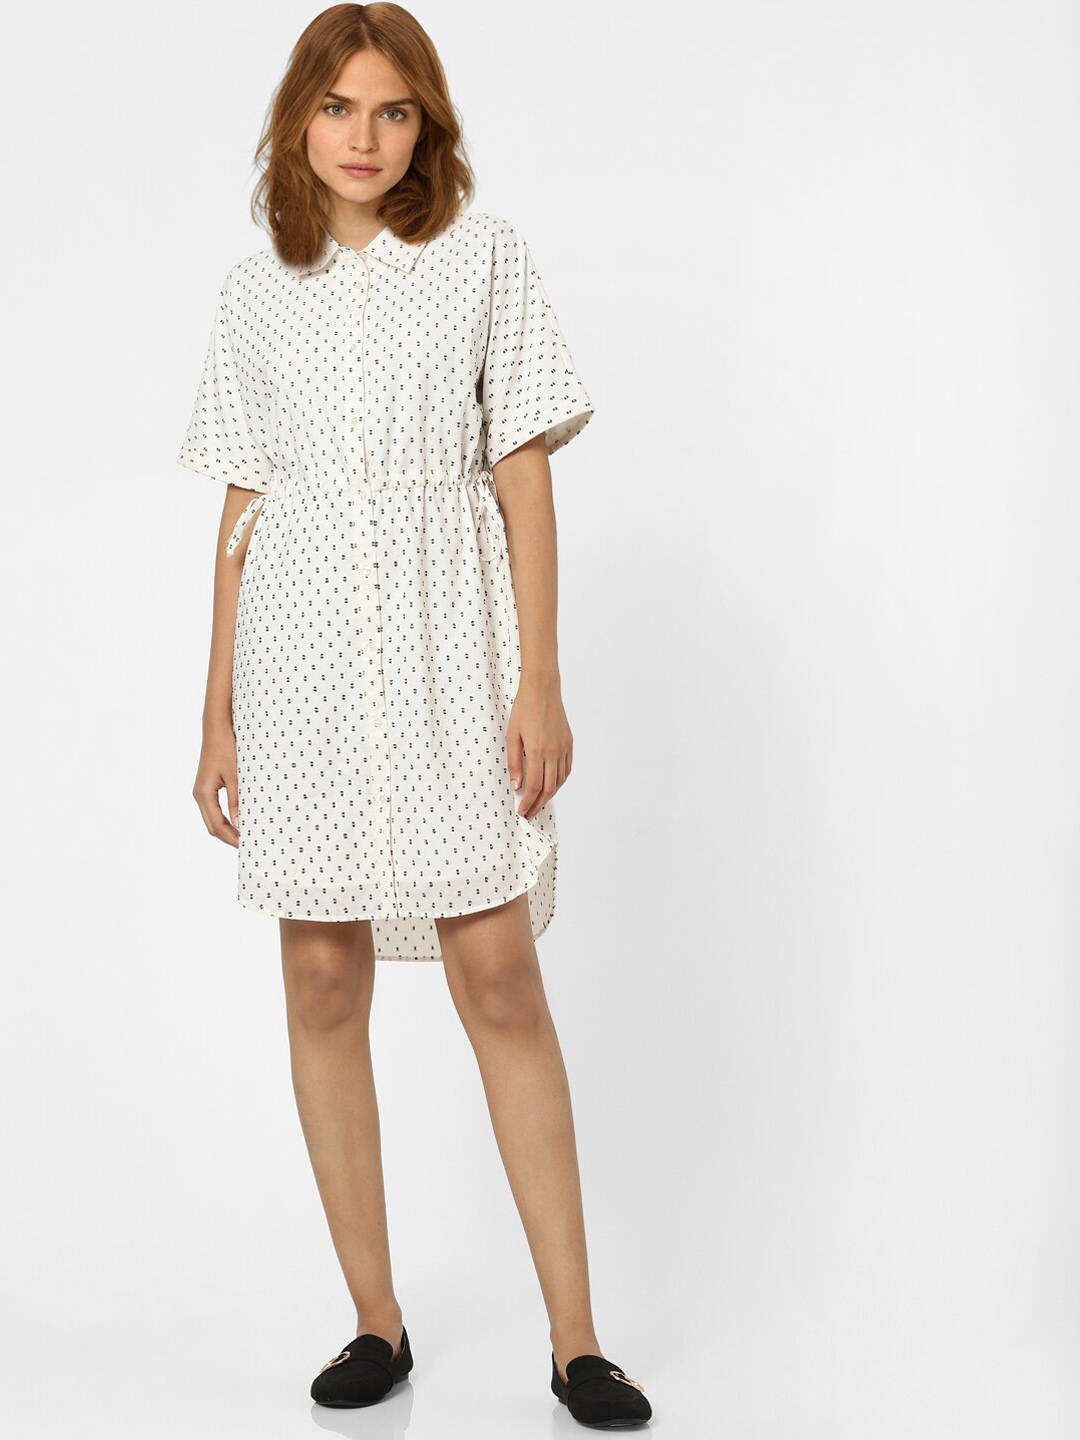 Buy Vero Moda Women White Printed Shirt Dress -  - Apparel for Women